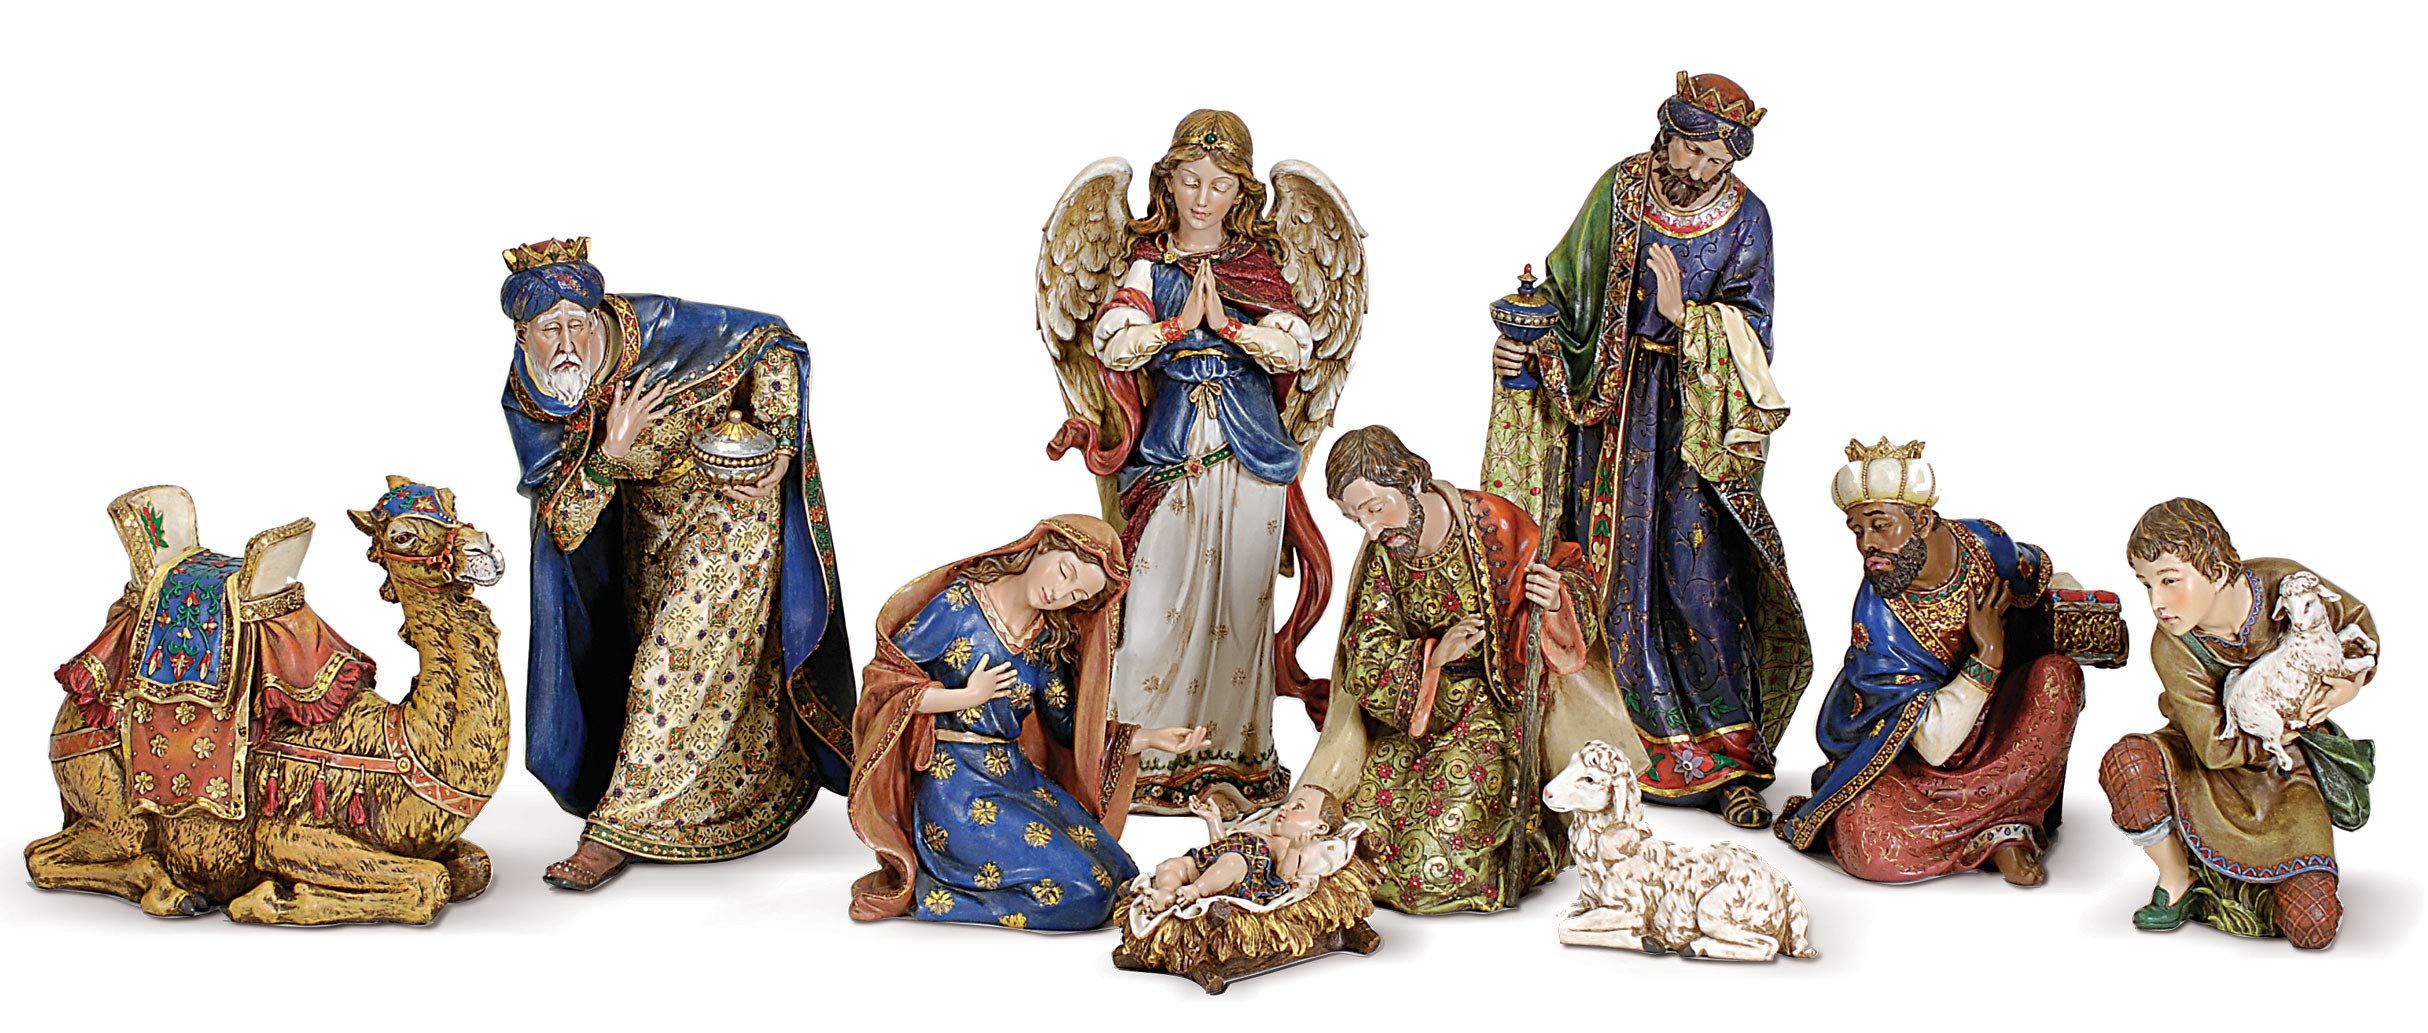 Joseph\'s Studio Josephs Studio by Roman - 10-Piece Nativity Set, Includes Holy Family, Three Kings, Angel, Shepherd, Sheep and camel, 4 - 19 H, 